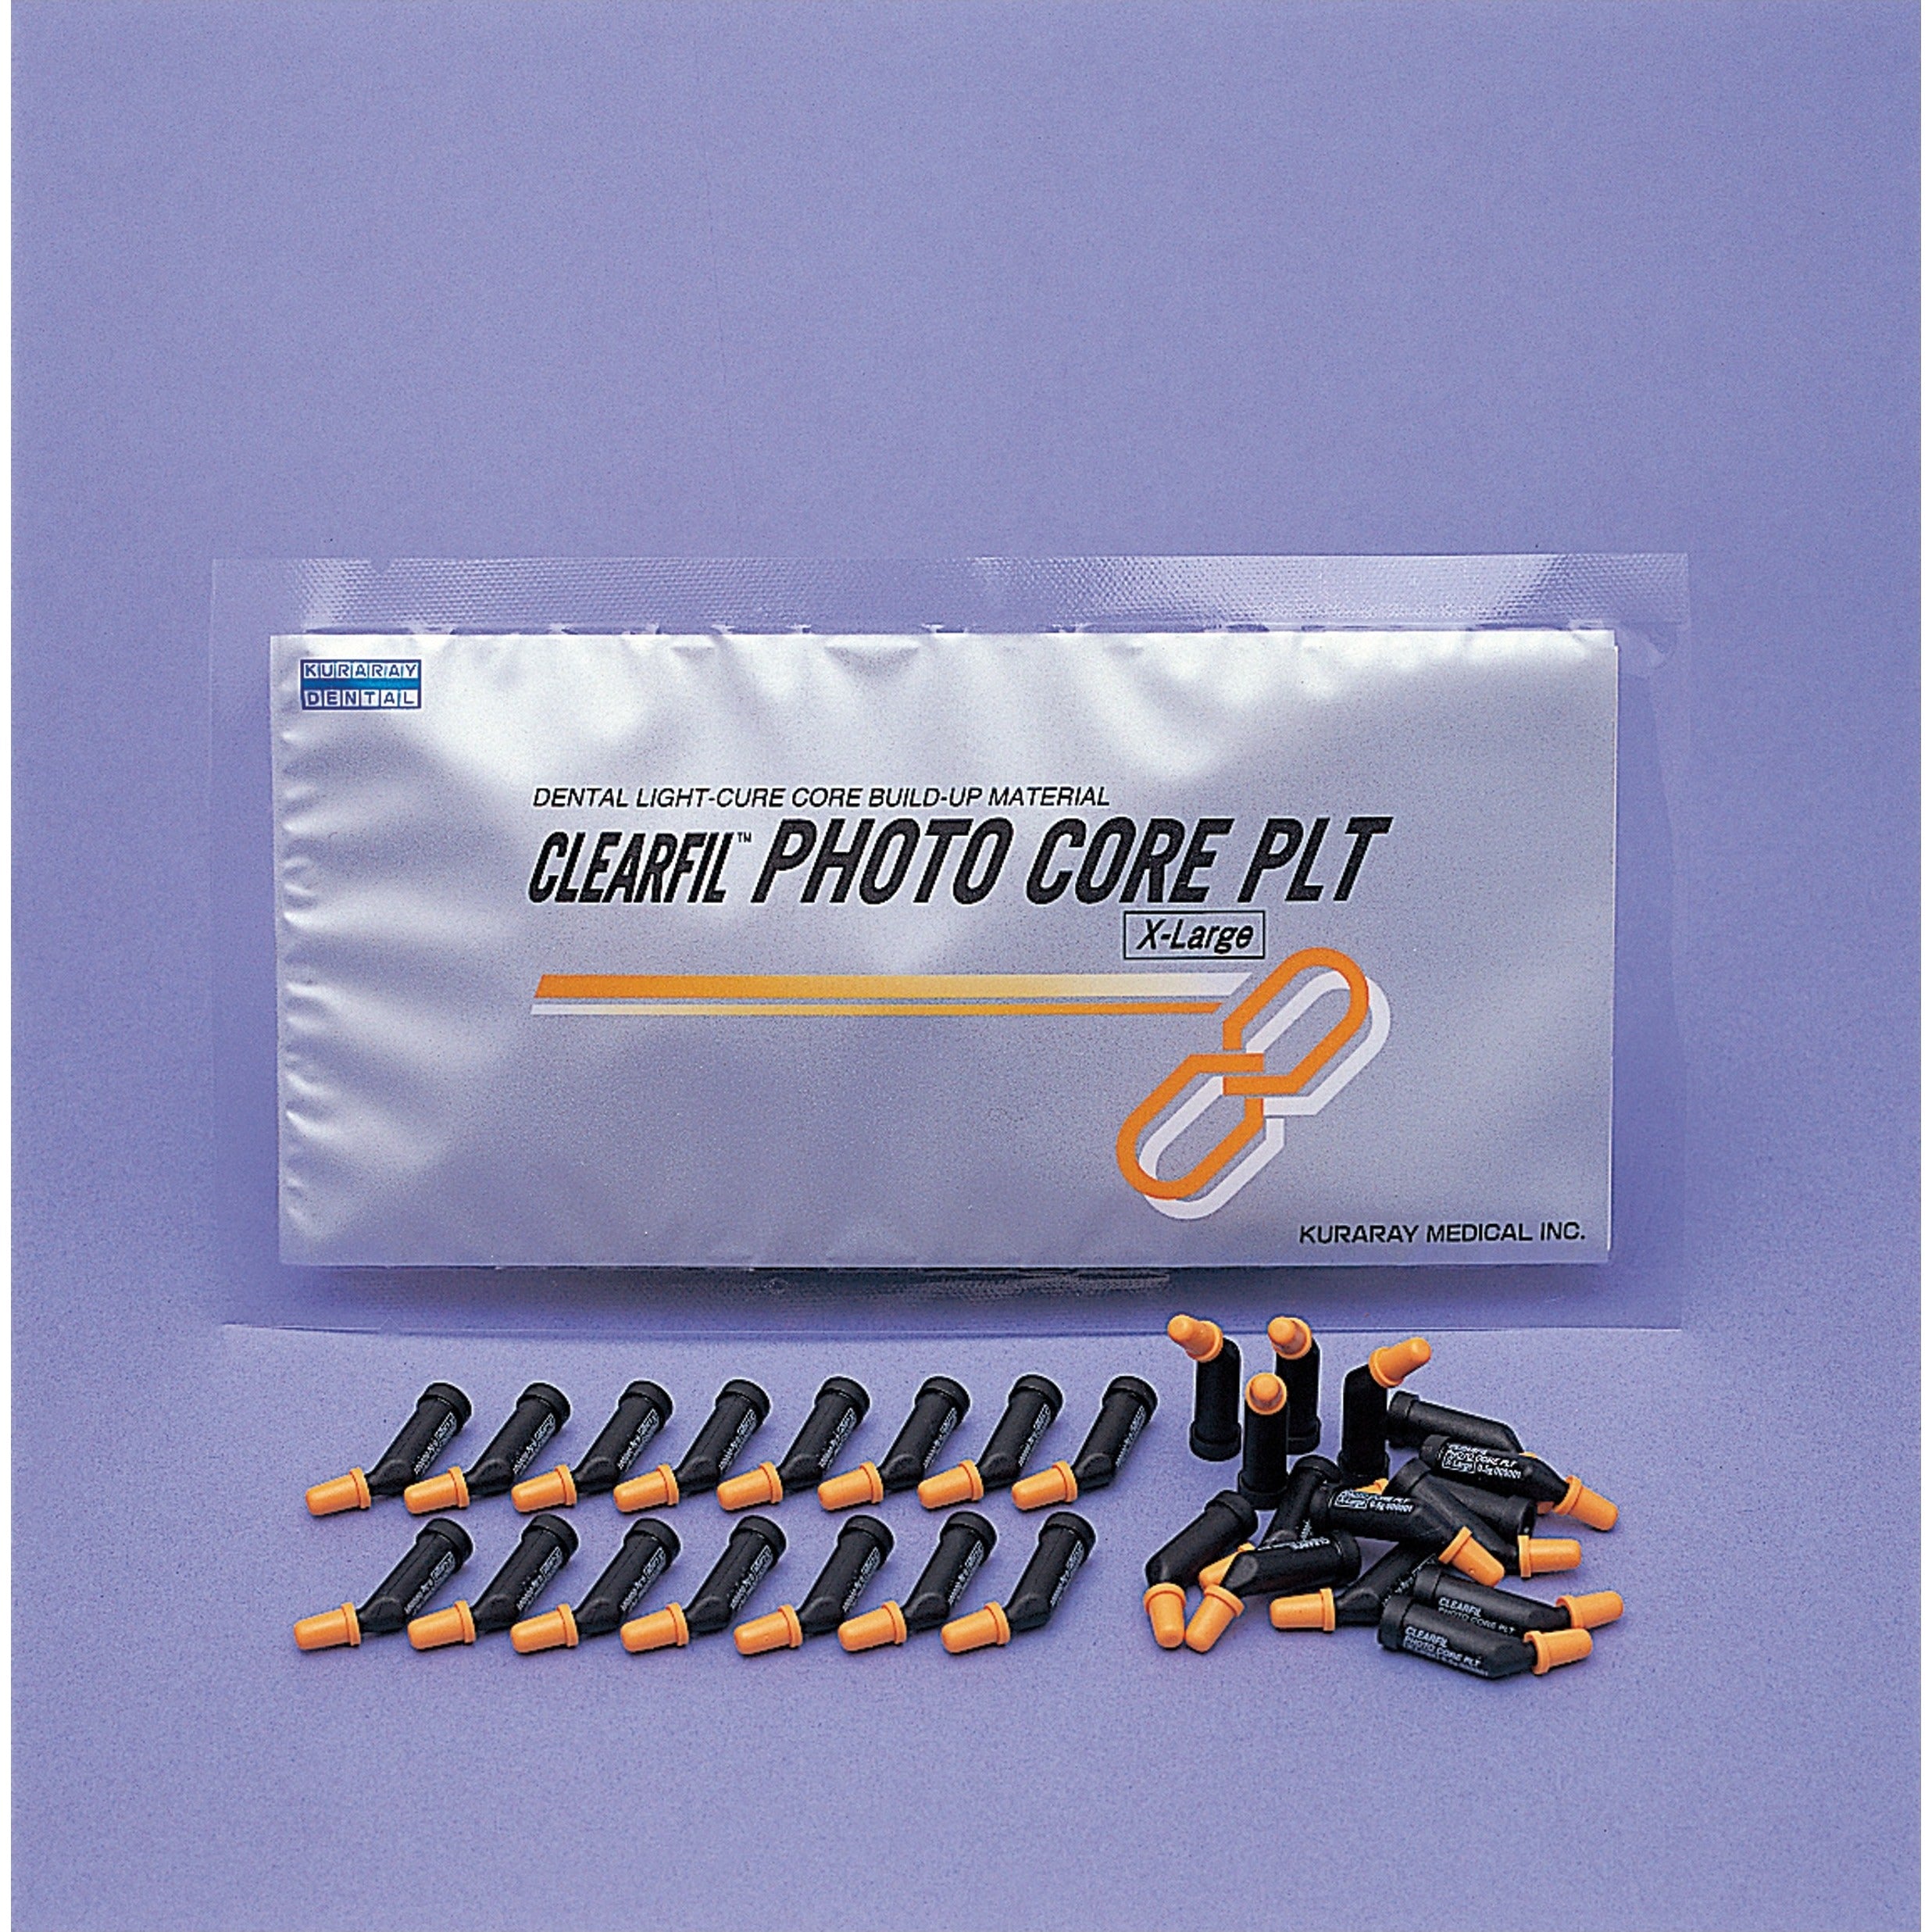 Clearfil Photo Core (Syringe and PLT)